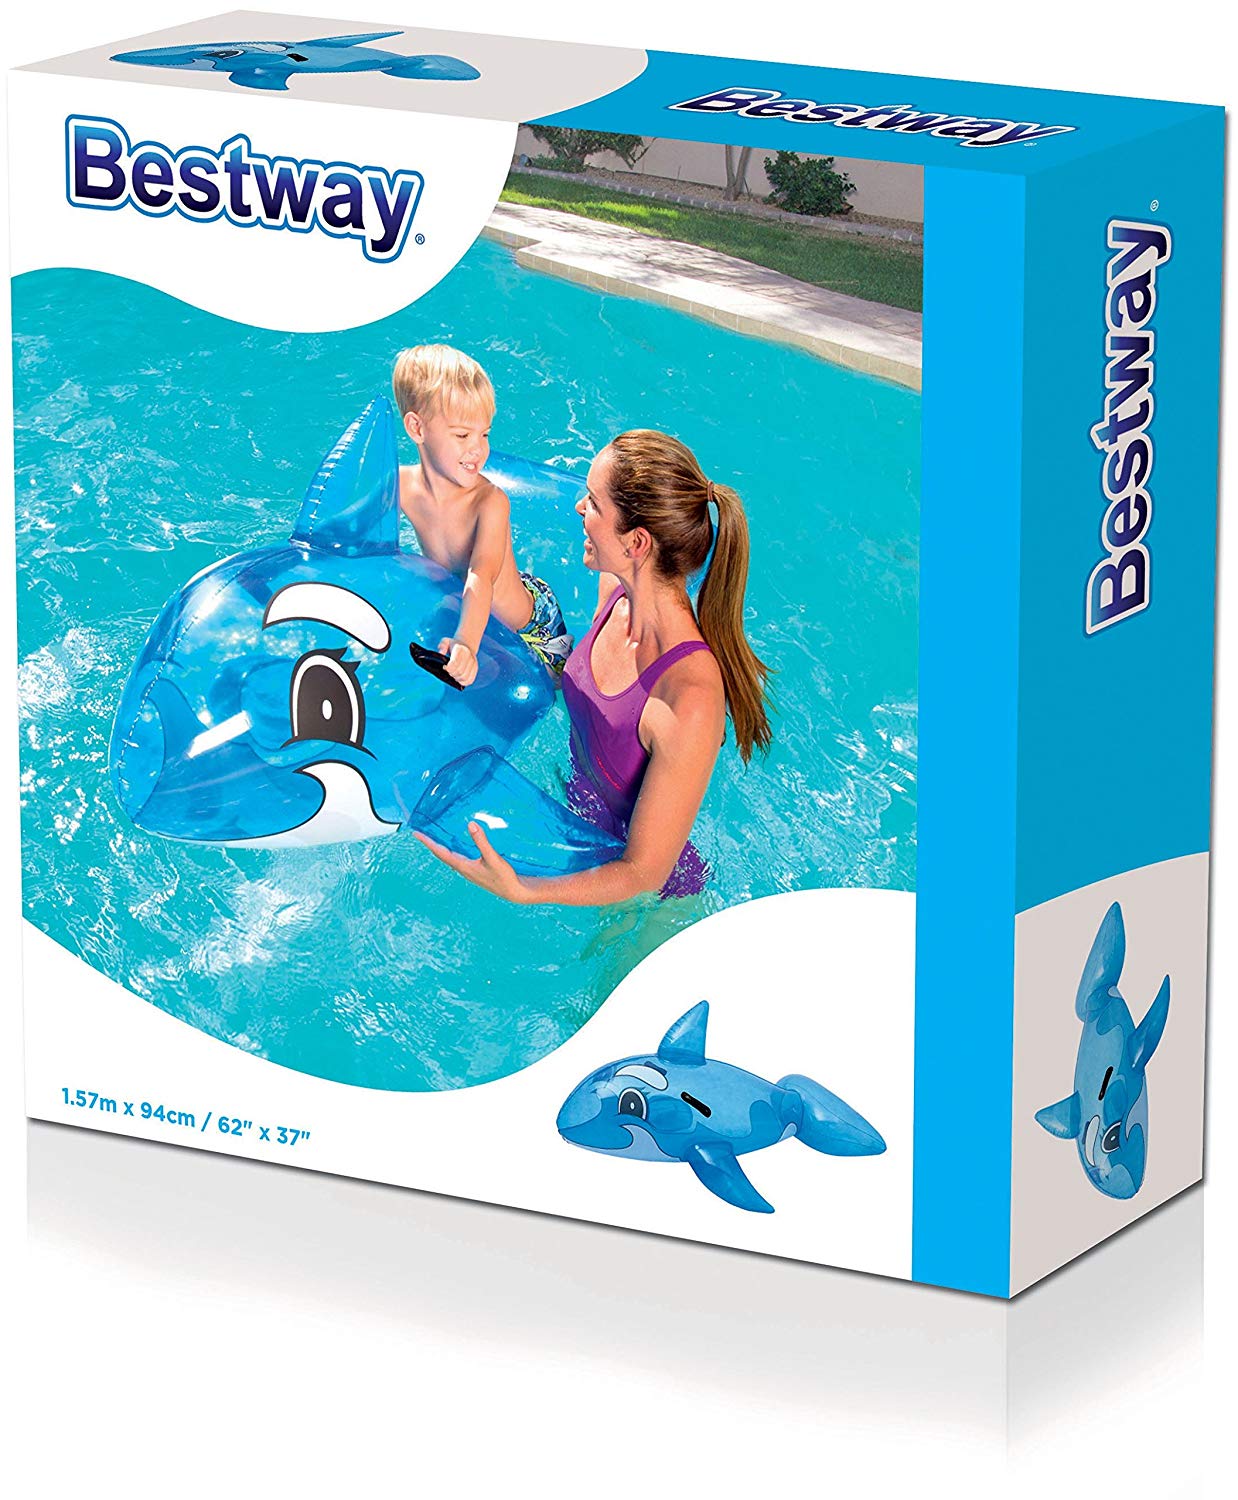 Bestway - Transparent Whale Rider (62" x 37"/1.57m x 94cm)